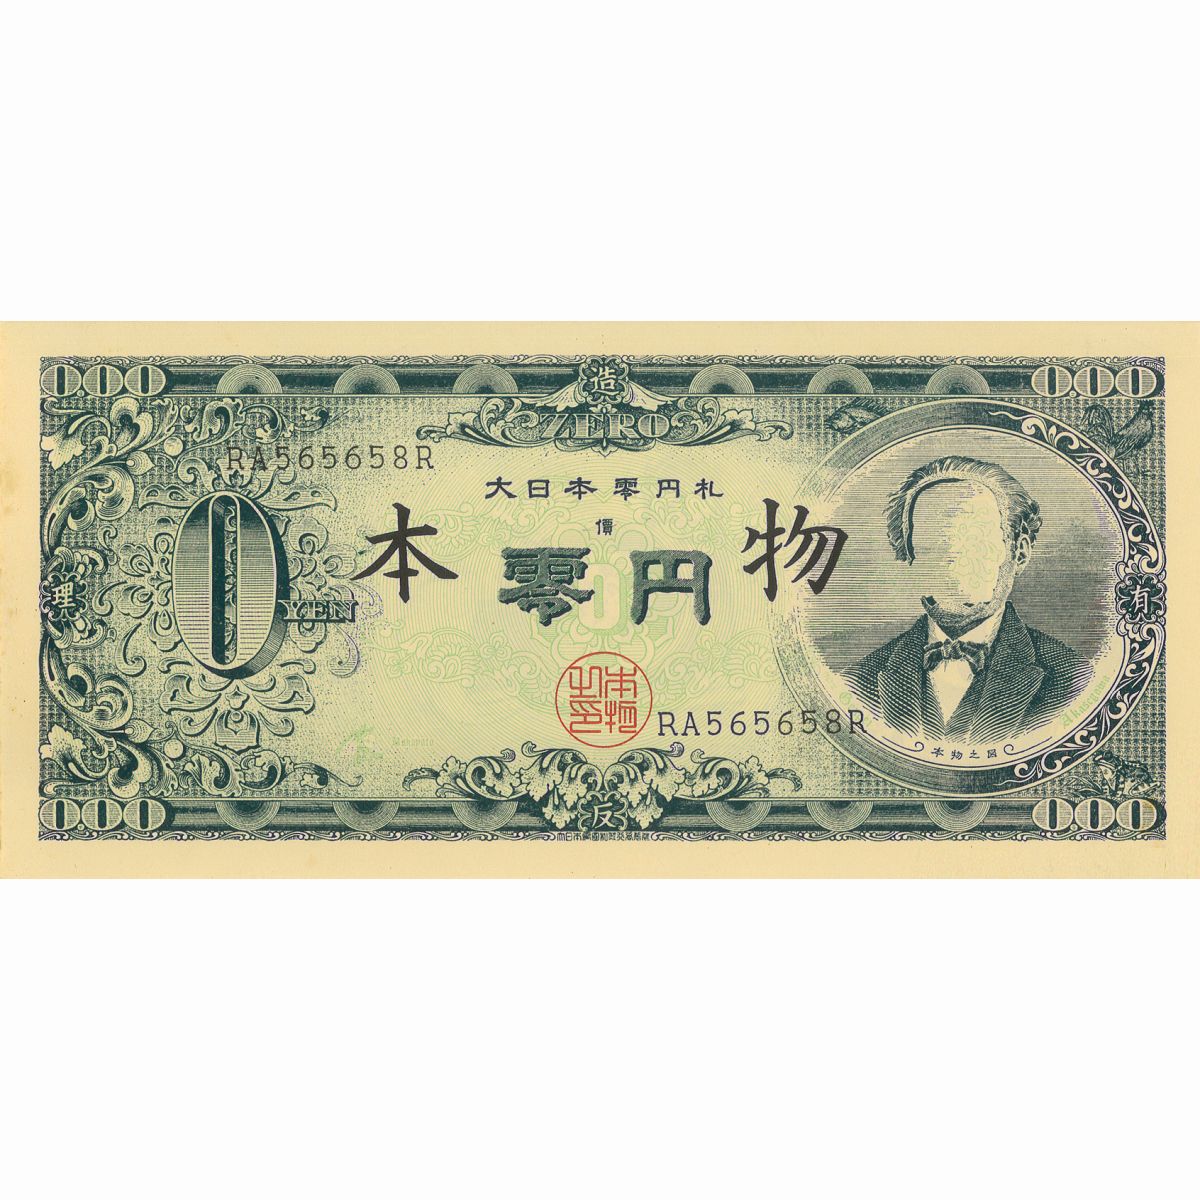 The Great Japanese Zero Yen Note